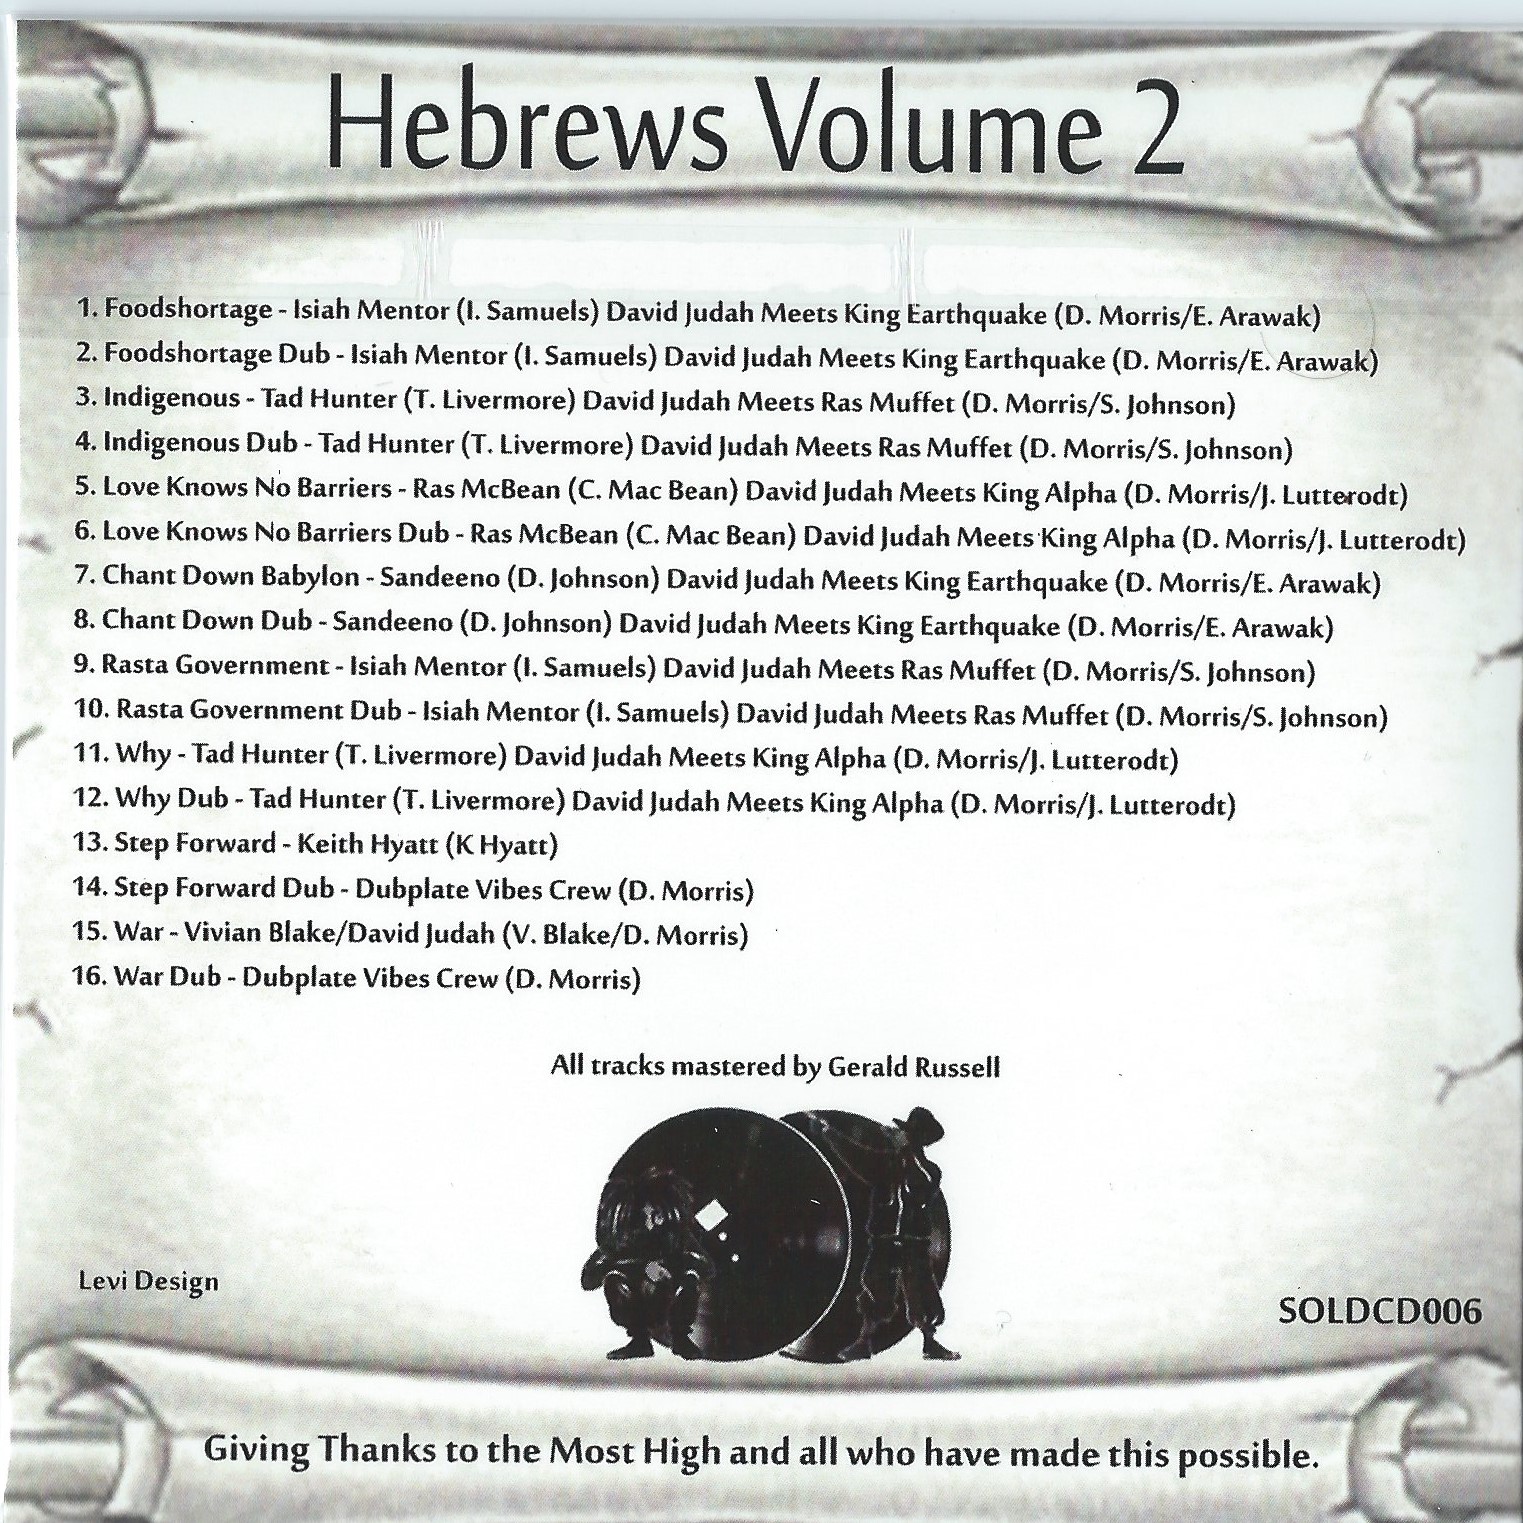 CD HEBREWS VOLUME 2